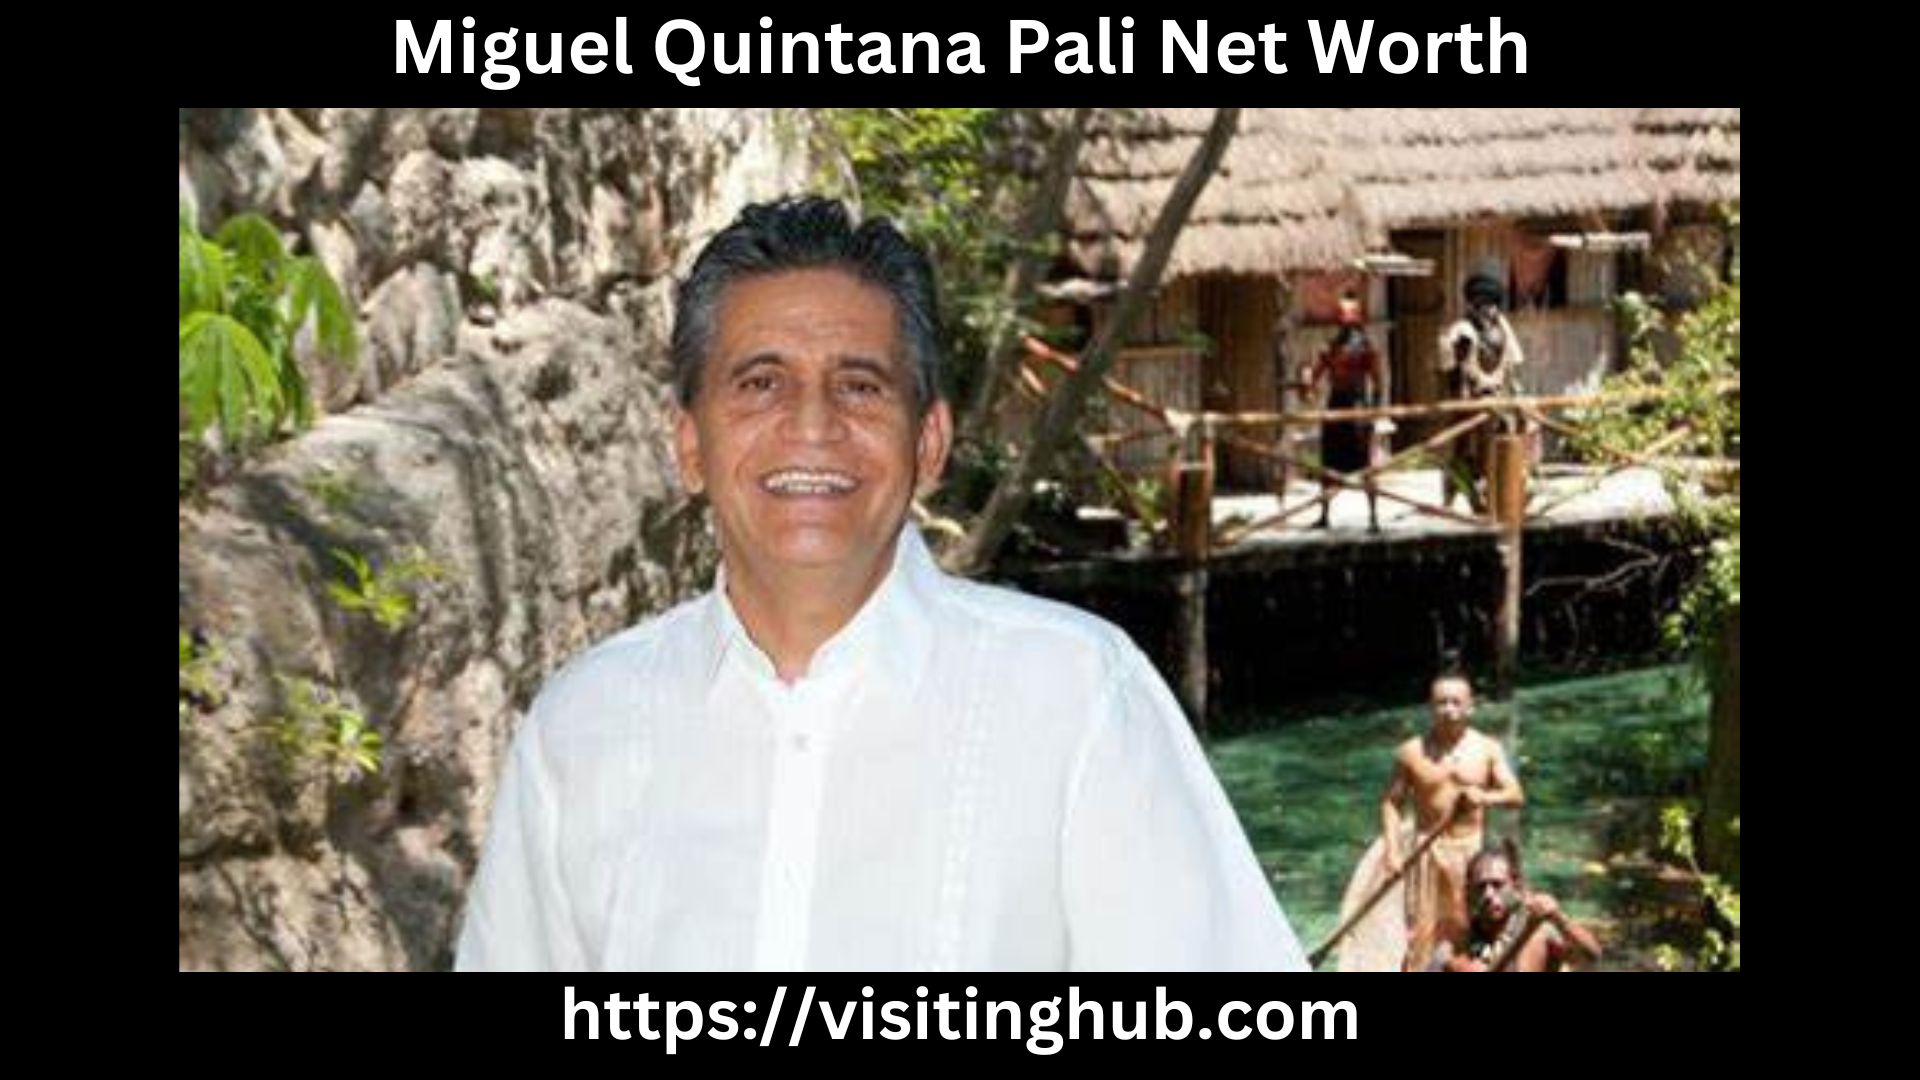 Miguel Quintana Pali Net Worth